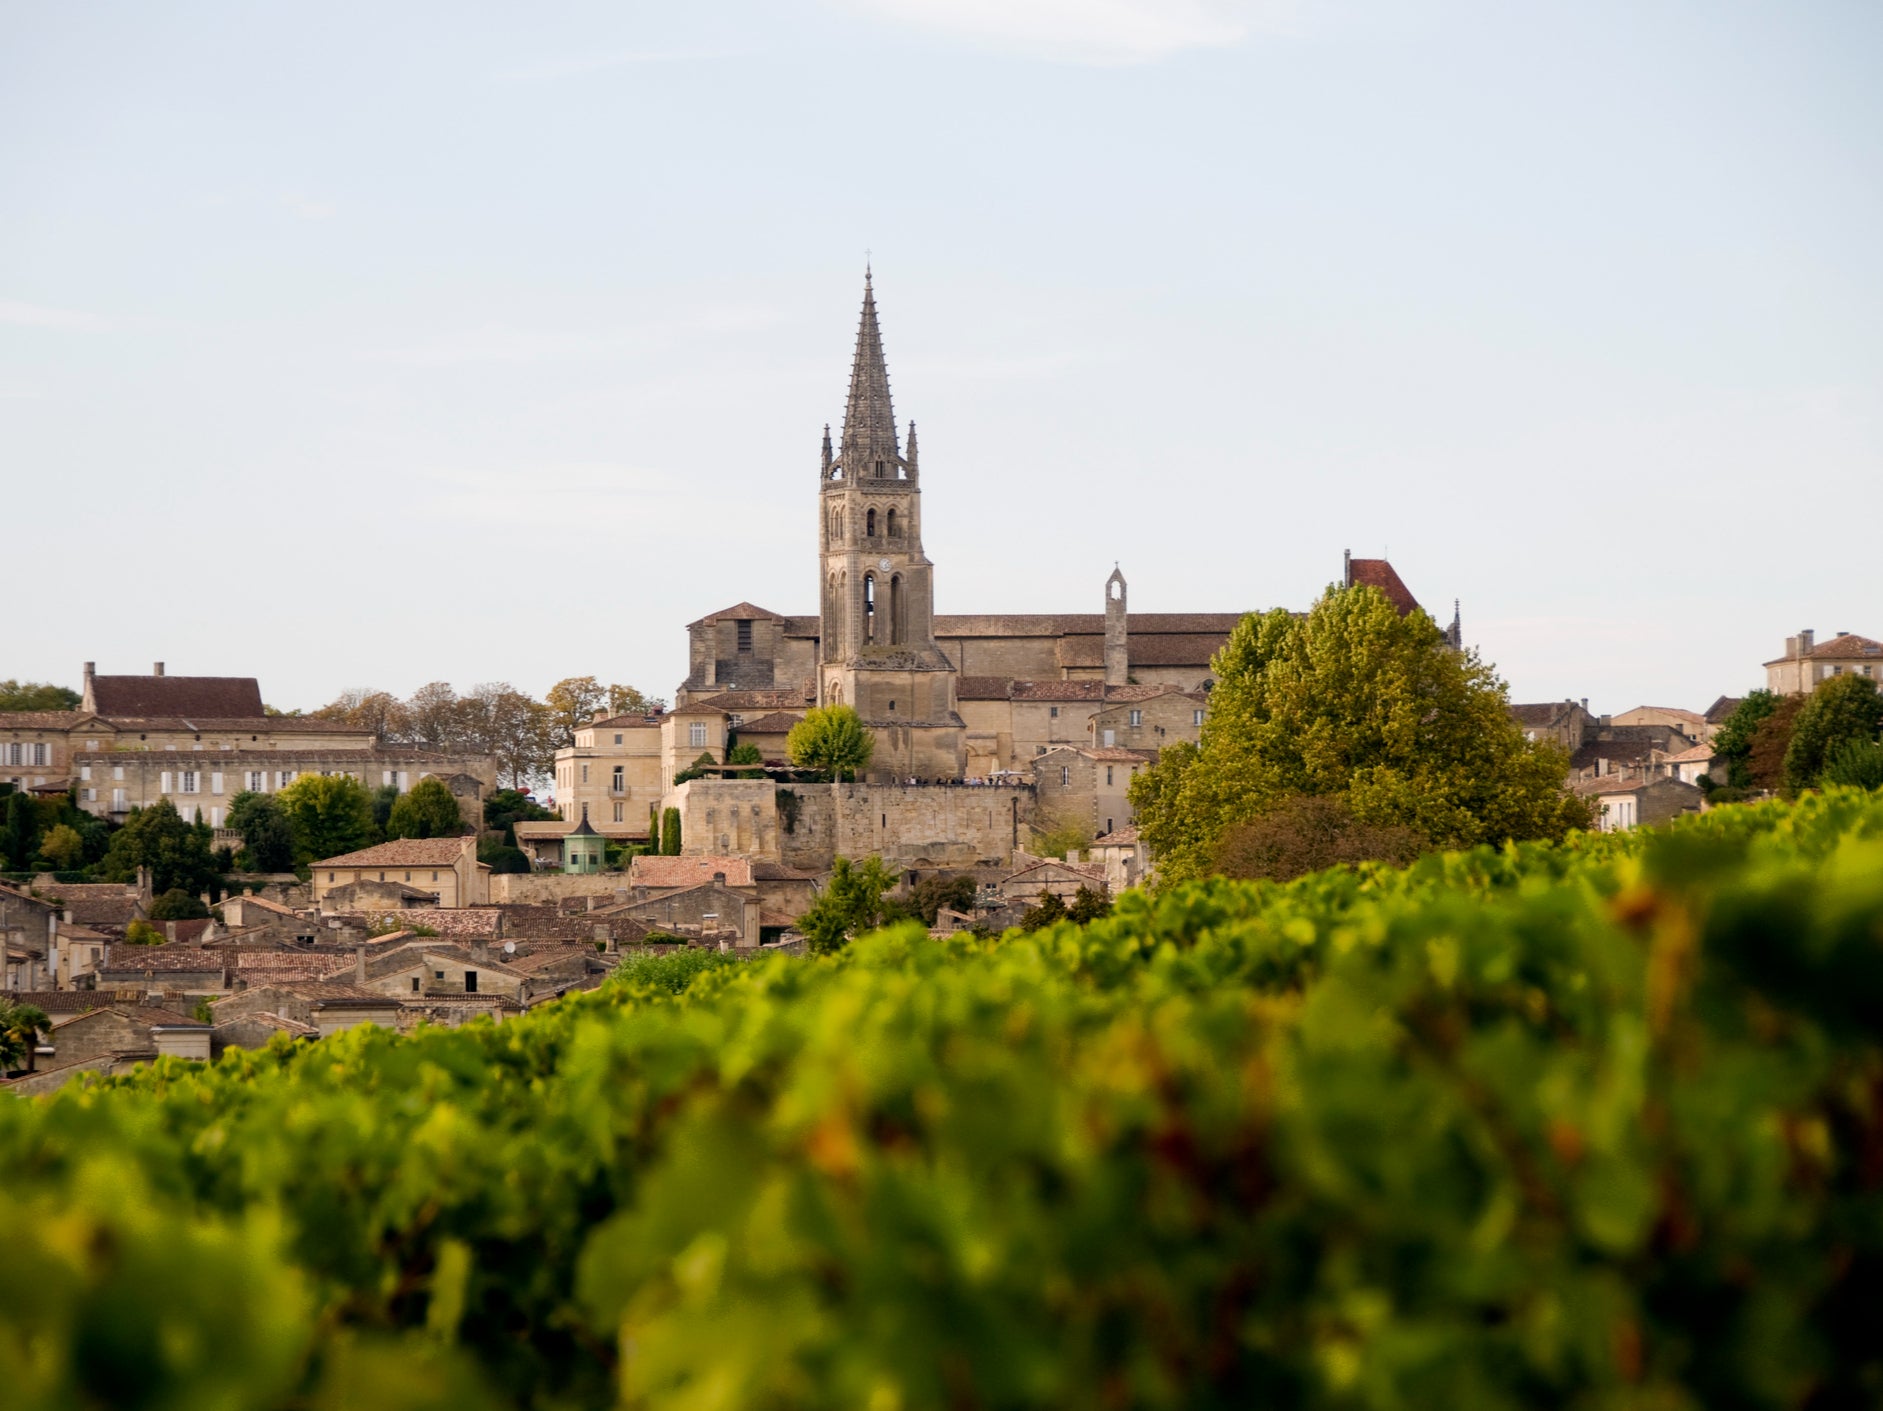 The vineyards of Saint-Emilion are an essential stop on a Bordeaux wine tour